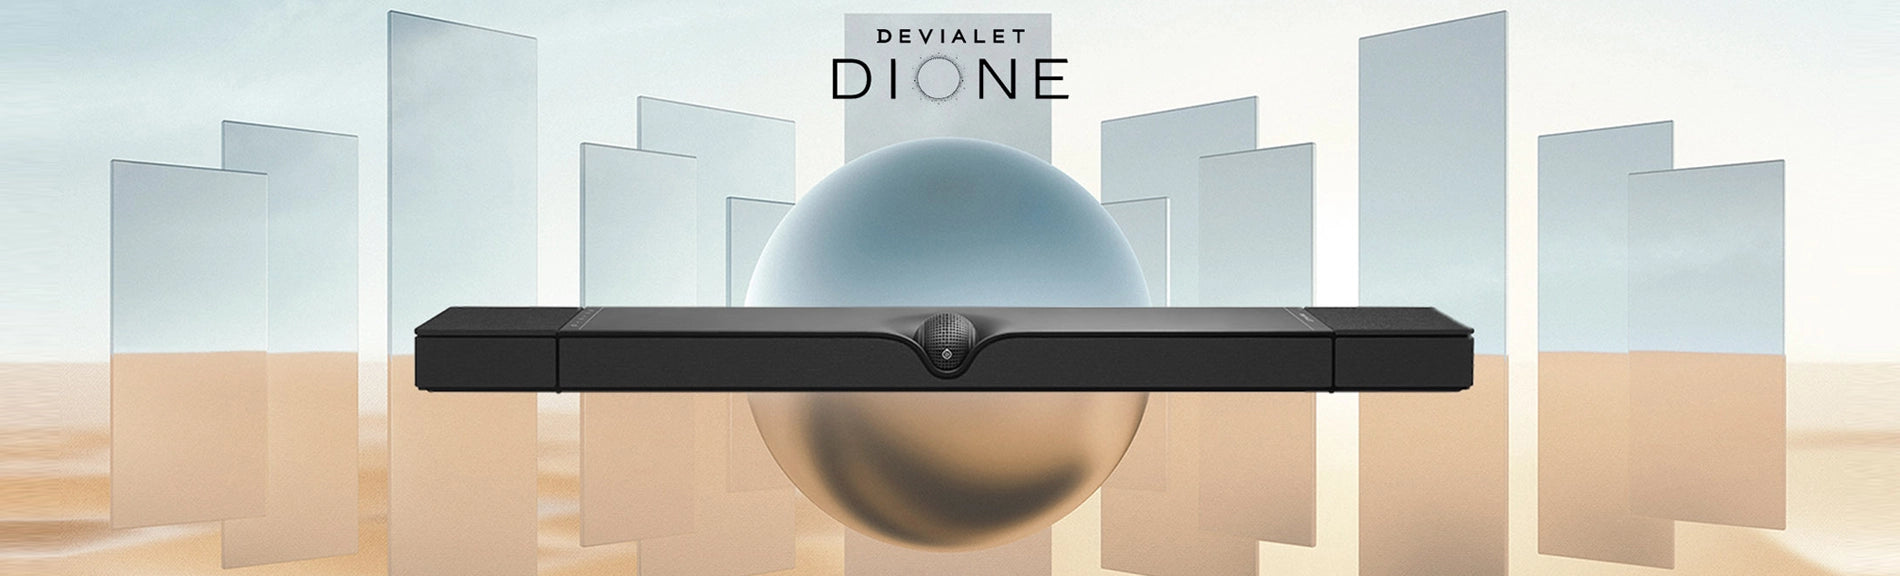 Devialet Dione